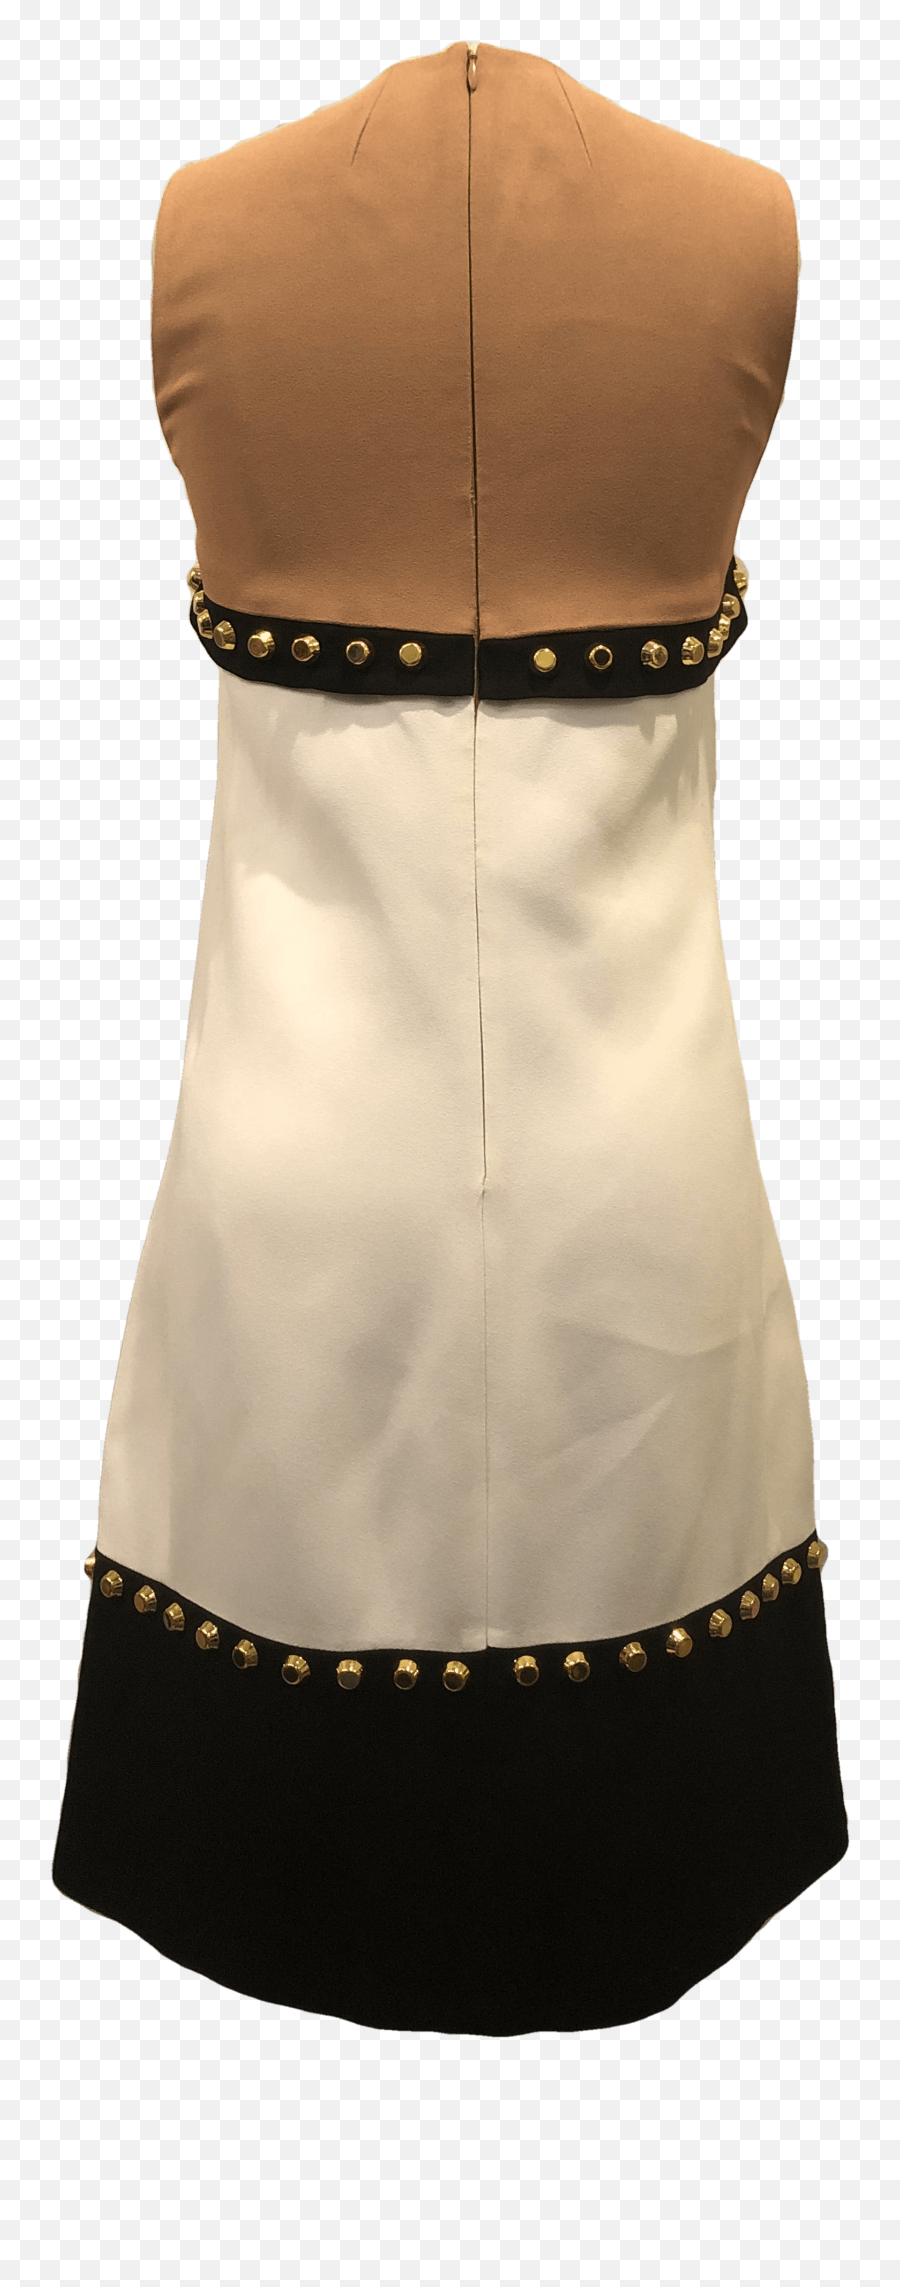 Vintage Black Tan And White Sleeveless Shift Dress With Emoji,Michael Kors Logo Belt